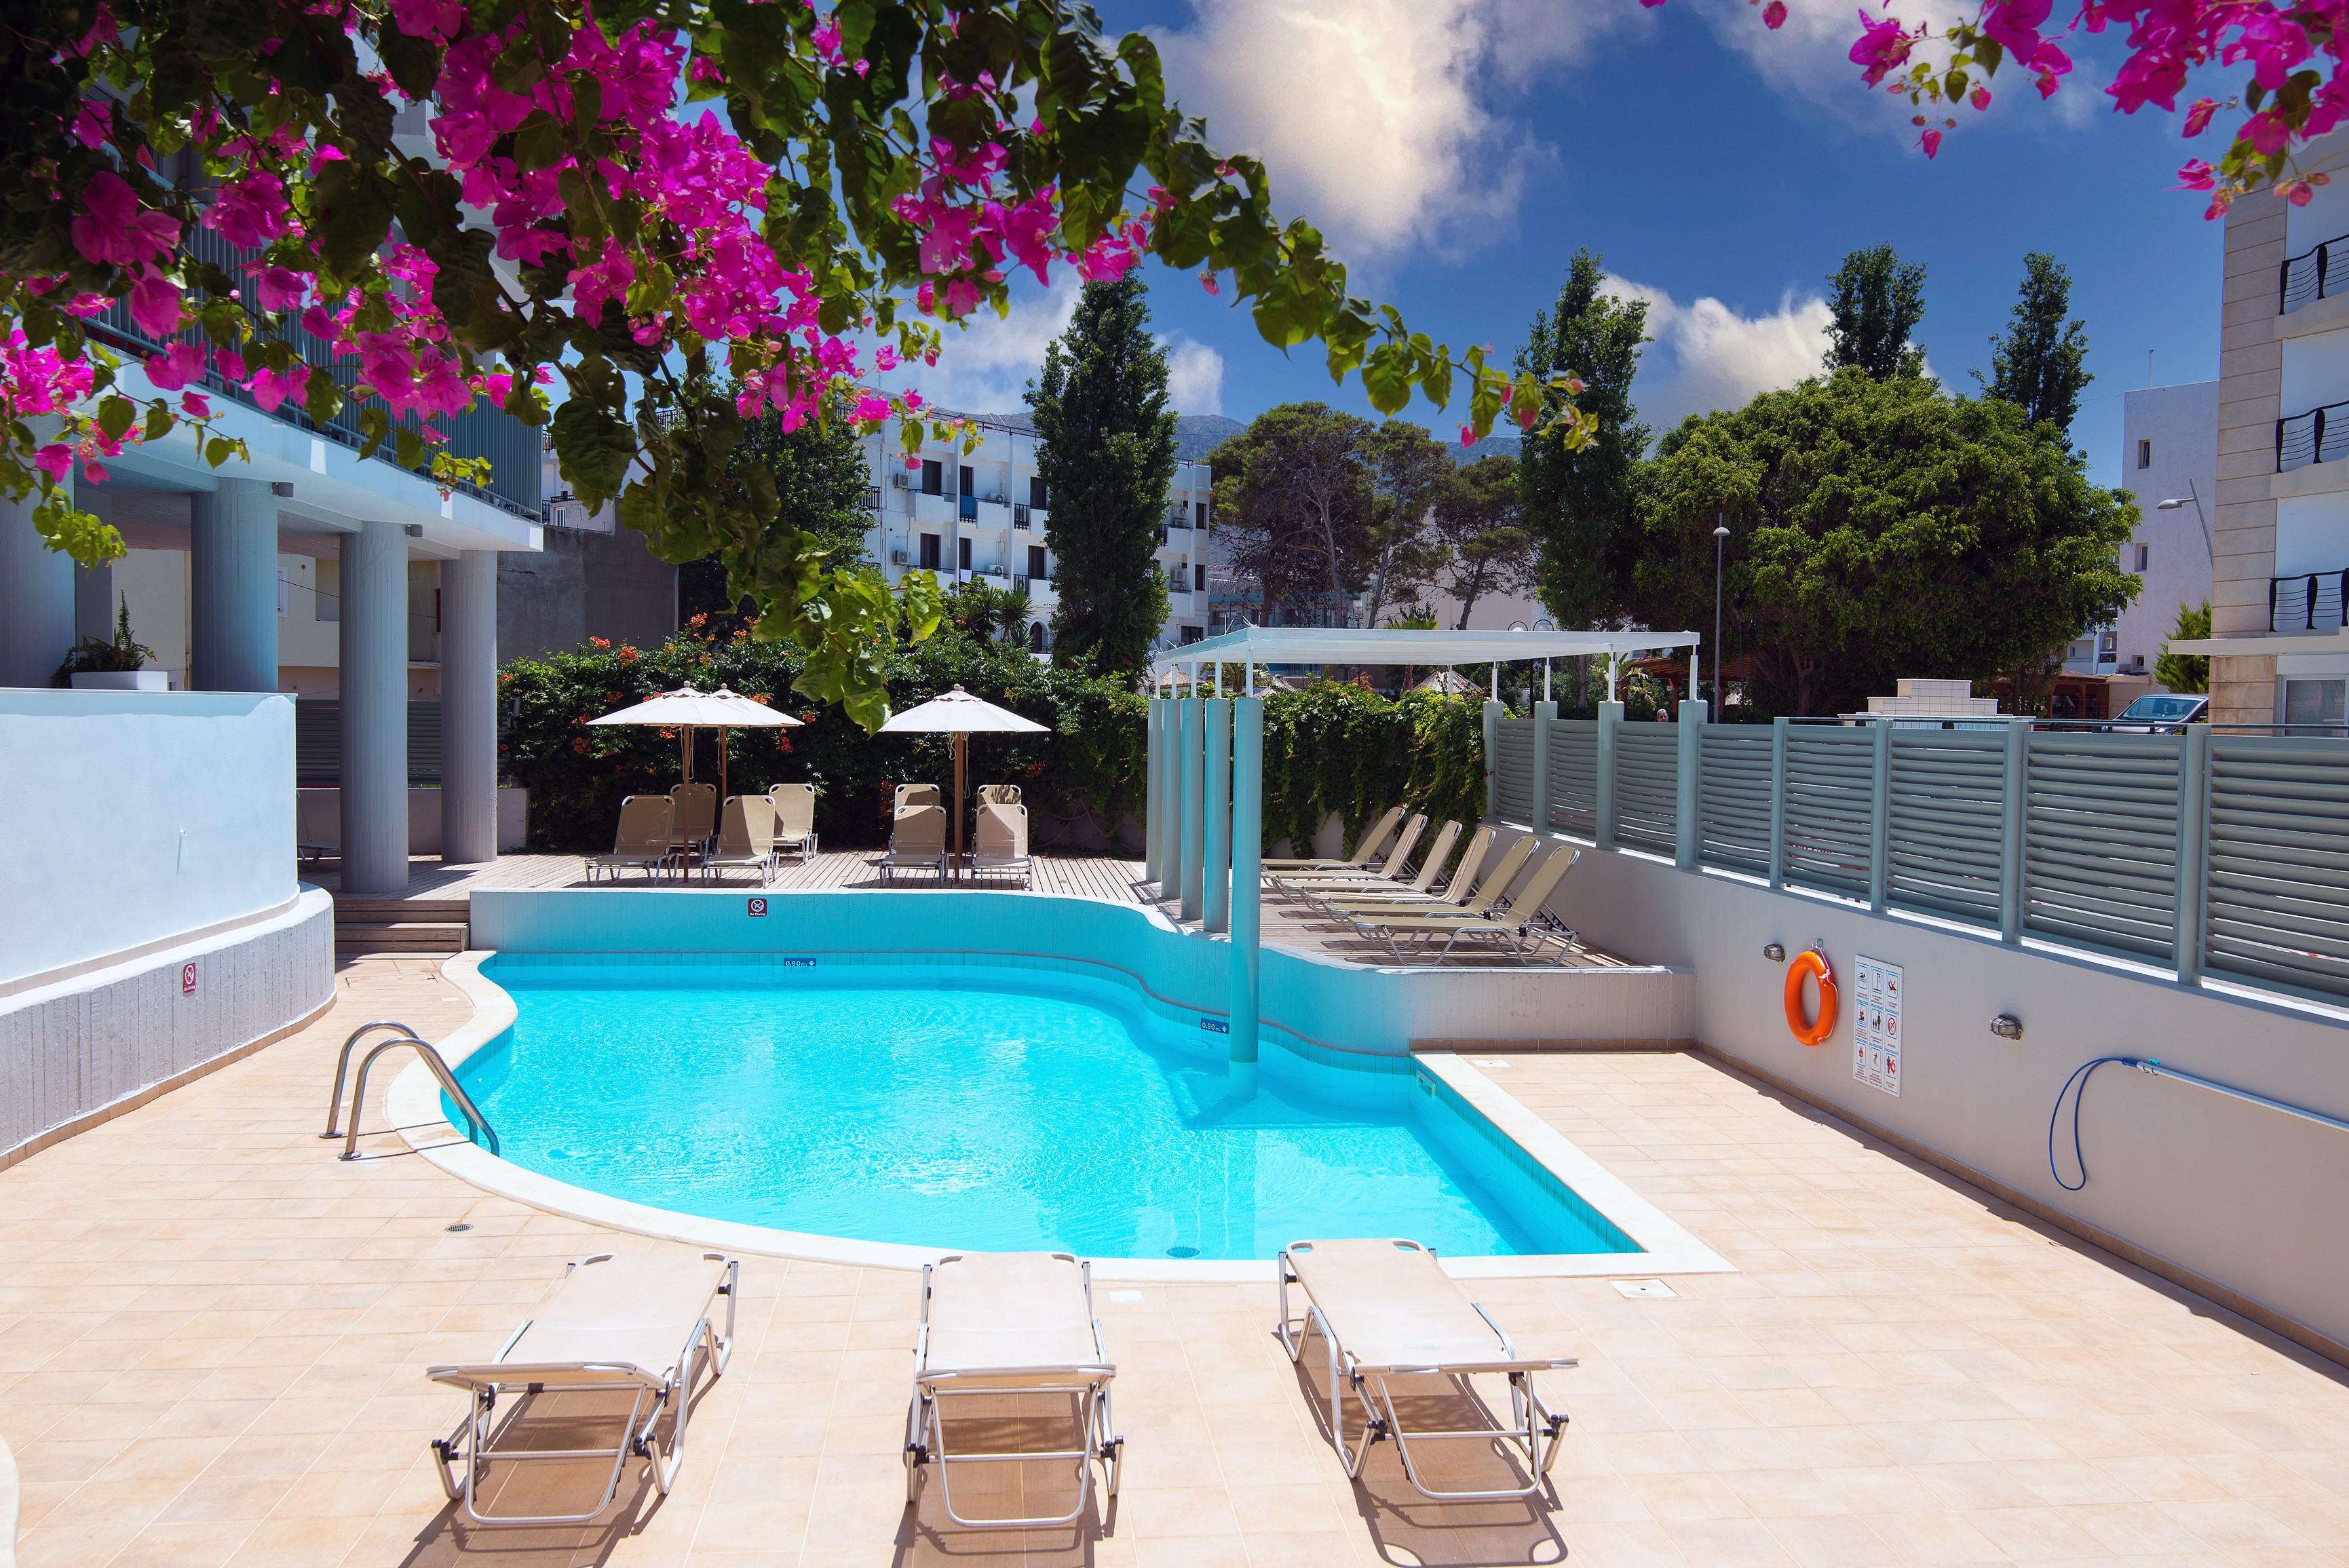 Alia Beach Hotel in Crete, Hersonissos | Holidays from £228 pp